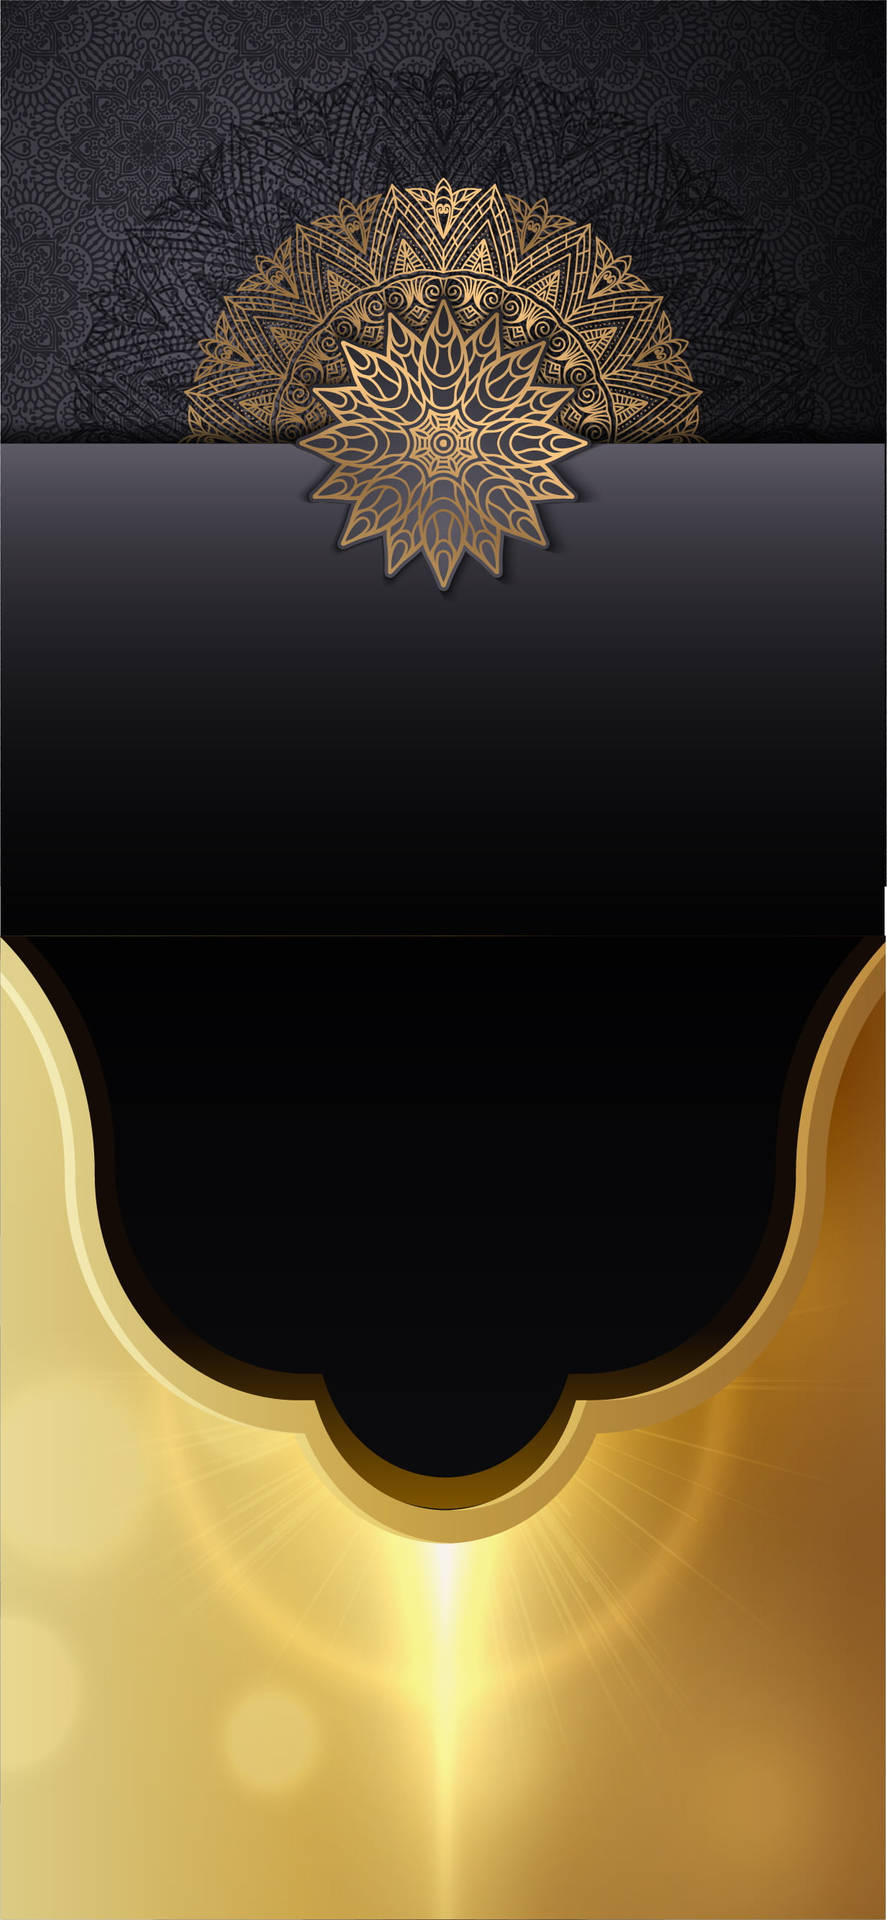 Elegant Black and Gold Mandala Design on iPhone Wallpaper